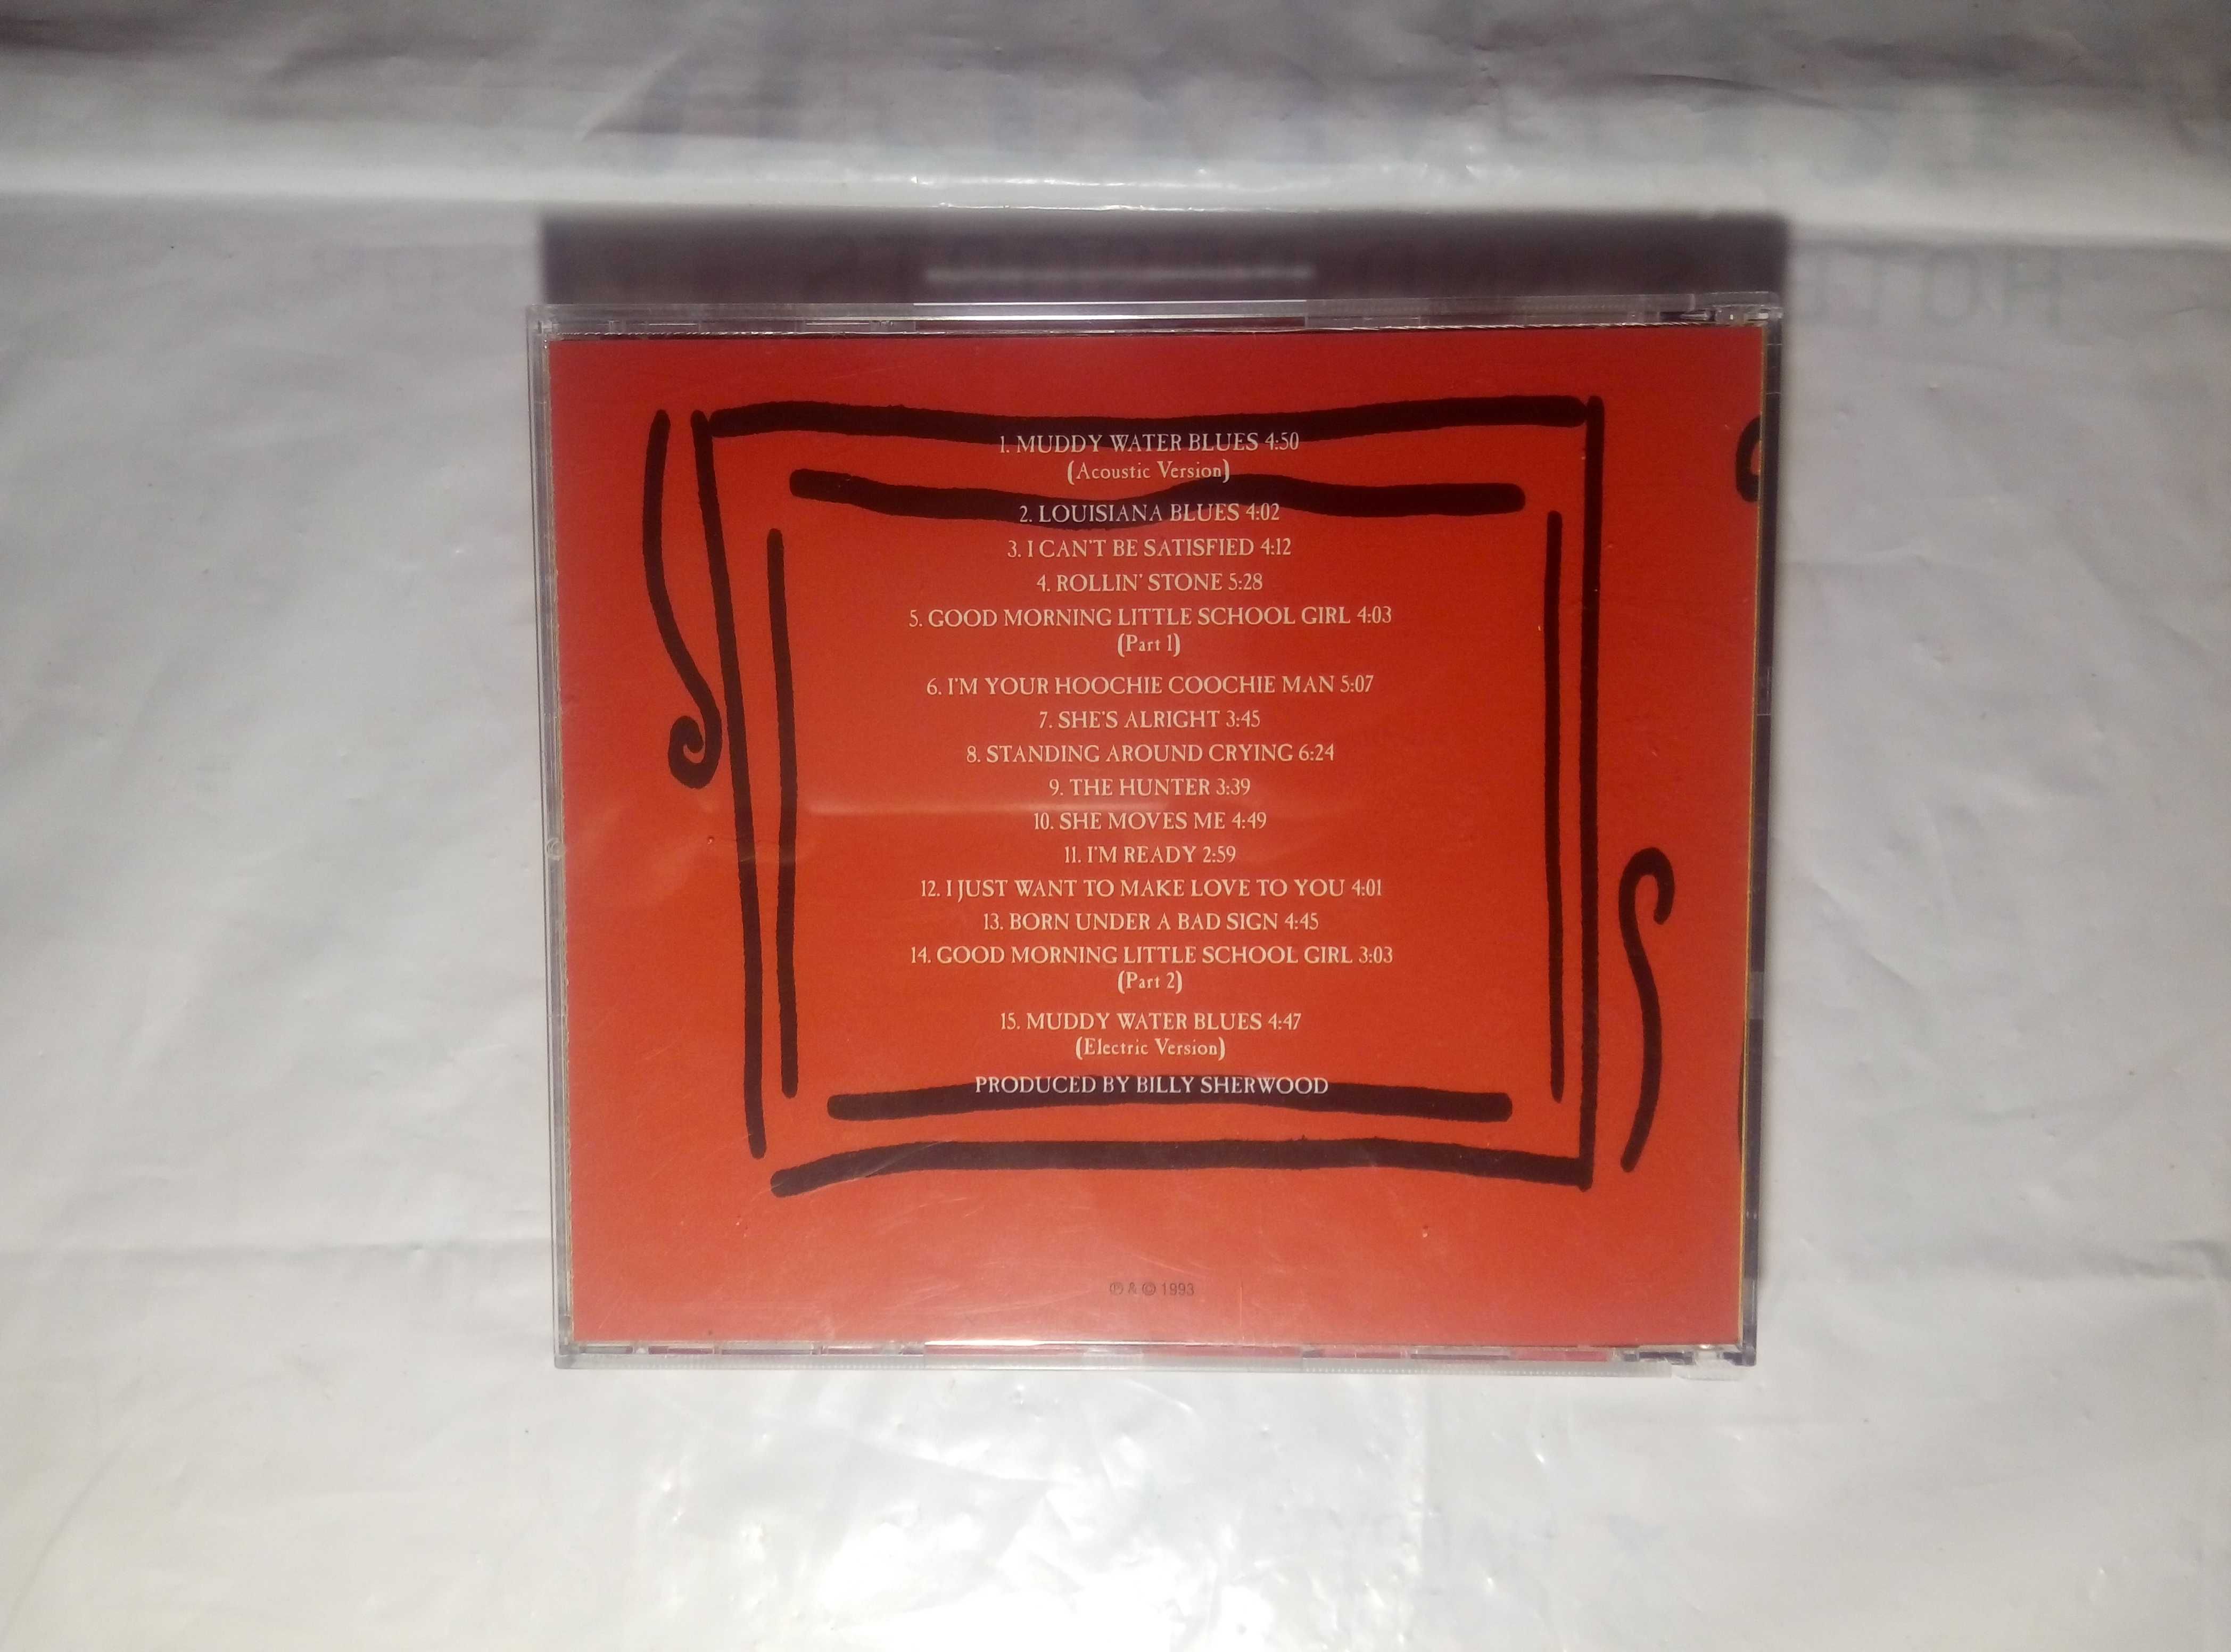 Paul Rodgers Muddy Water Blues CD диск как новый